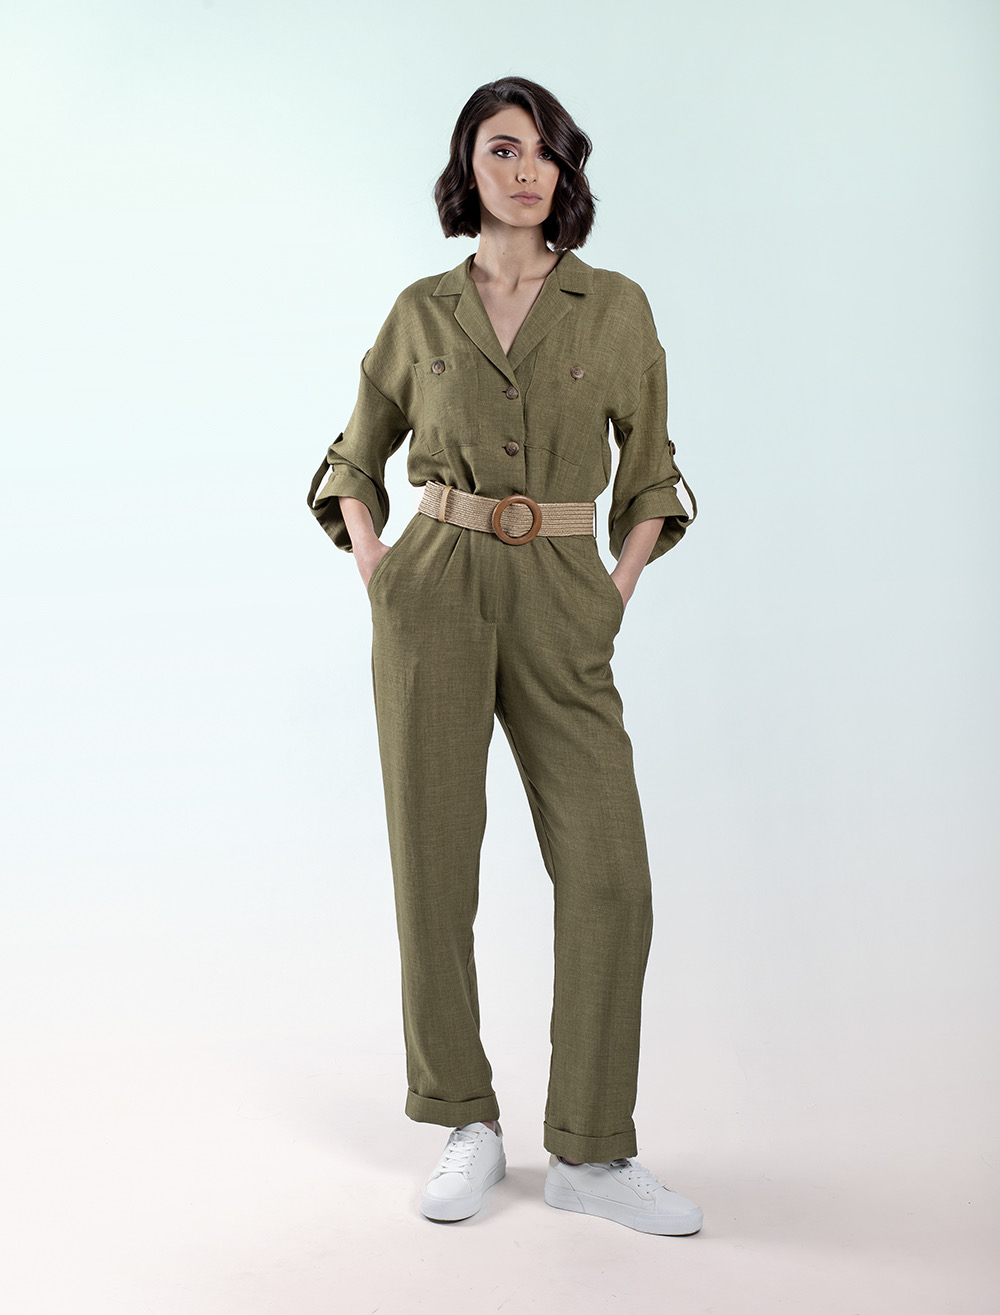 Belted Linen Jumpsuit in Olive Green - Jumpsuit - Wear Zed